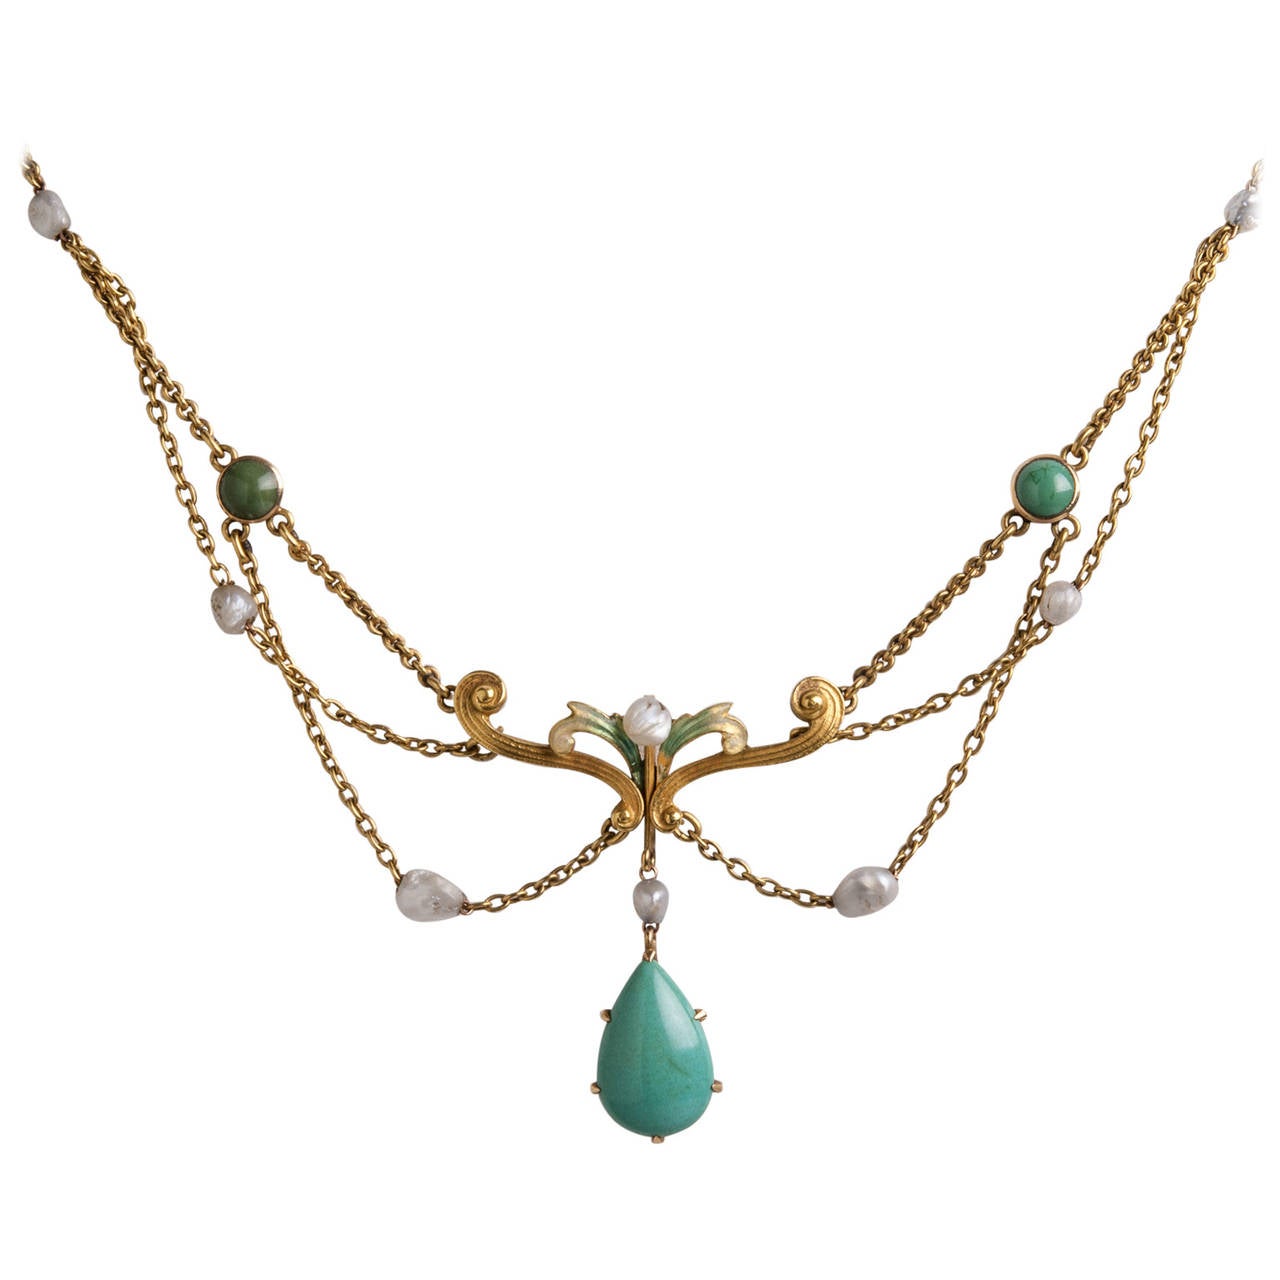 Art Nouveau Turquoise, Enamel and Pearl Necklace